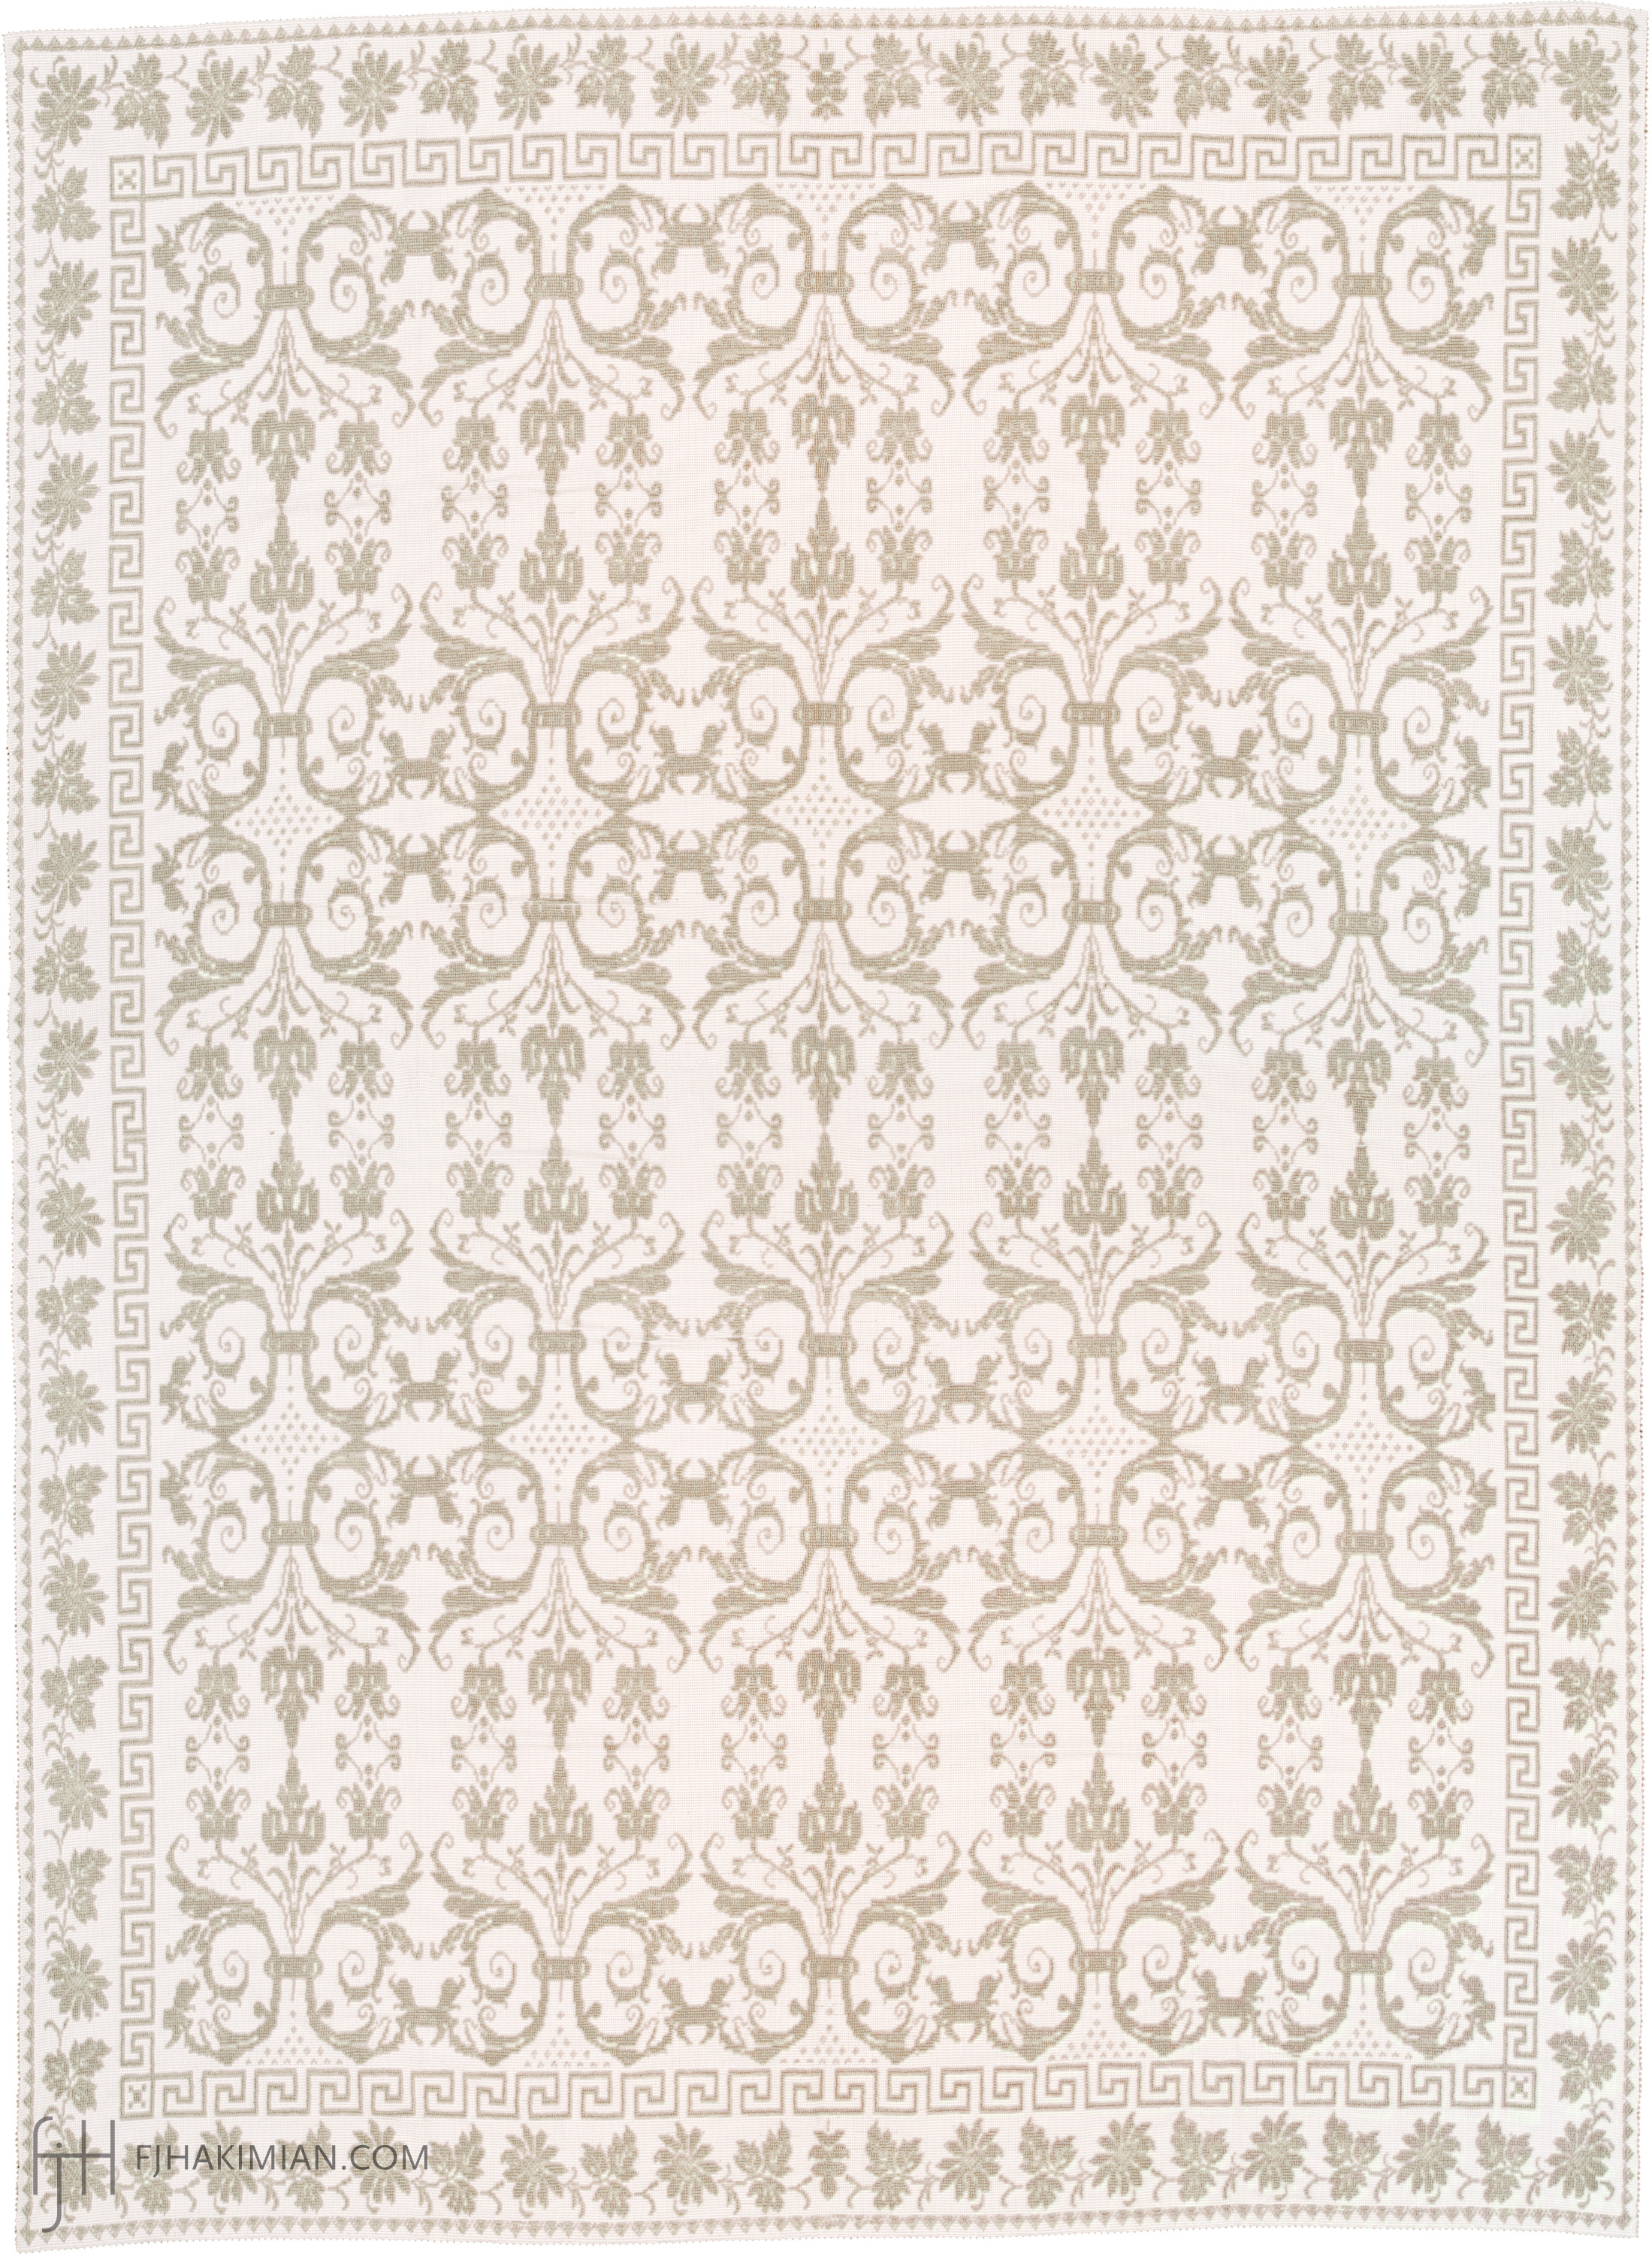 25049 | IF-Sardinian Mohair Design | Custom Sardinian Carpet | FJ Hakimian | Carpet Gallery in NYC